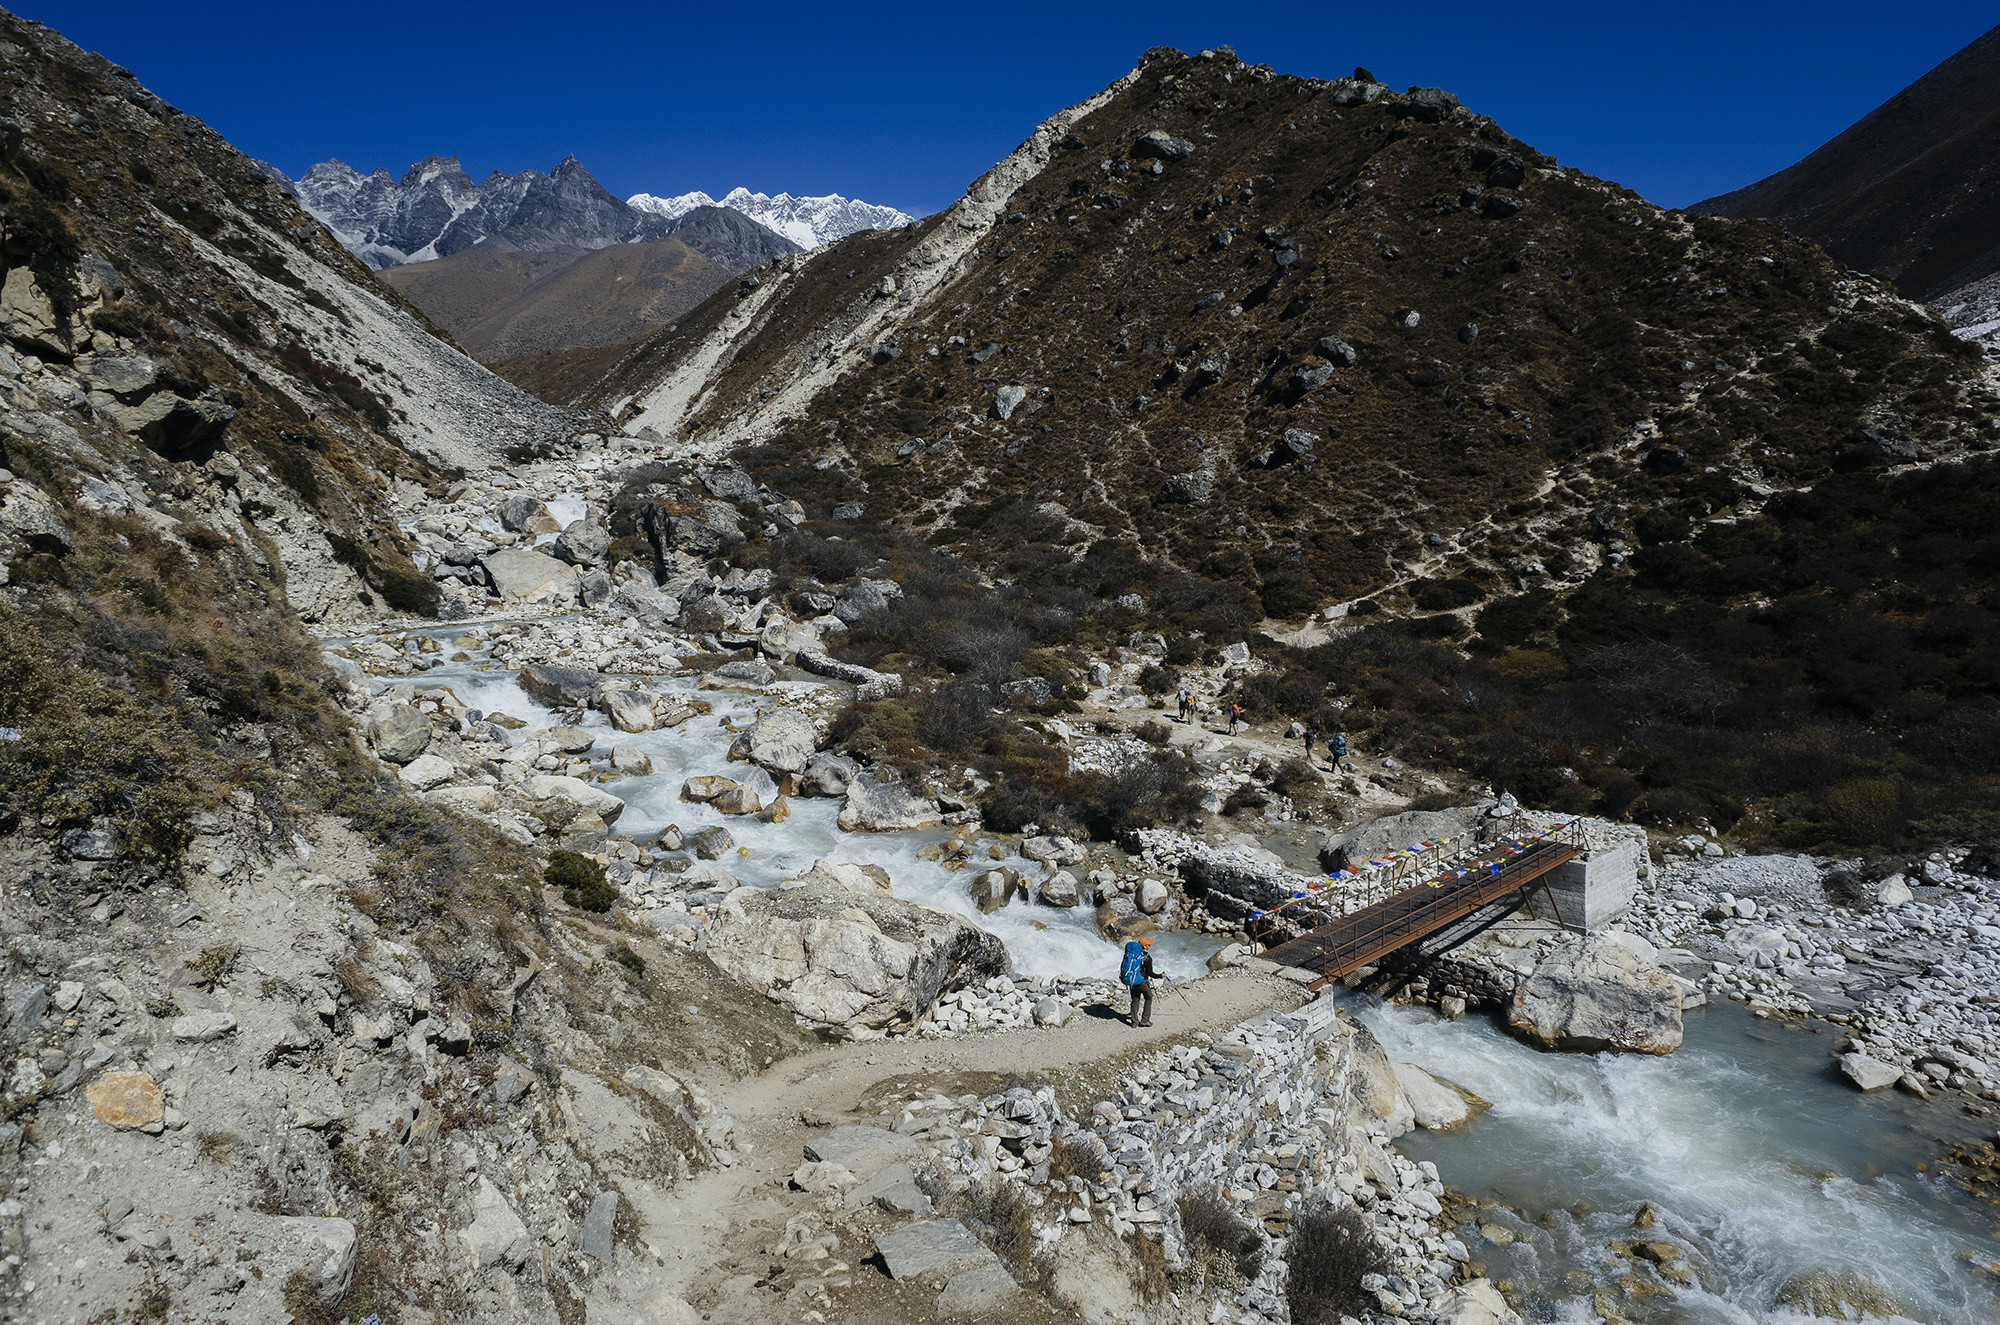 Trekking to Everest Base Camp